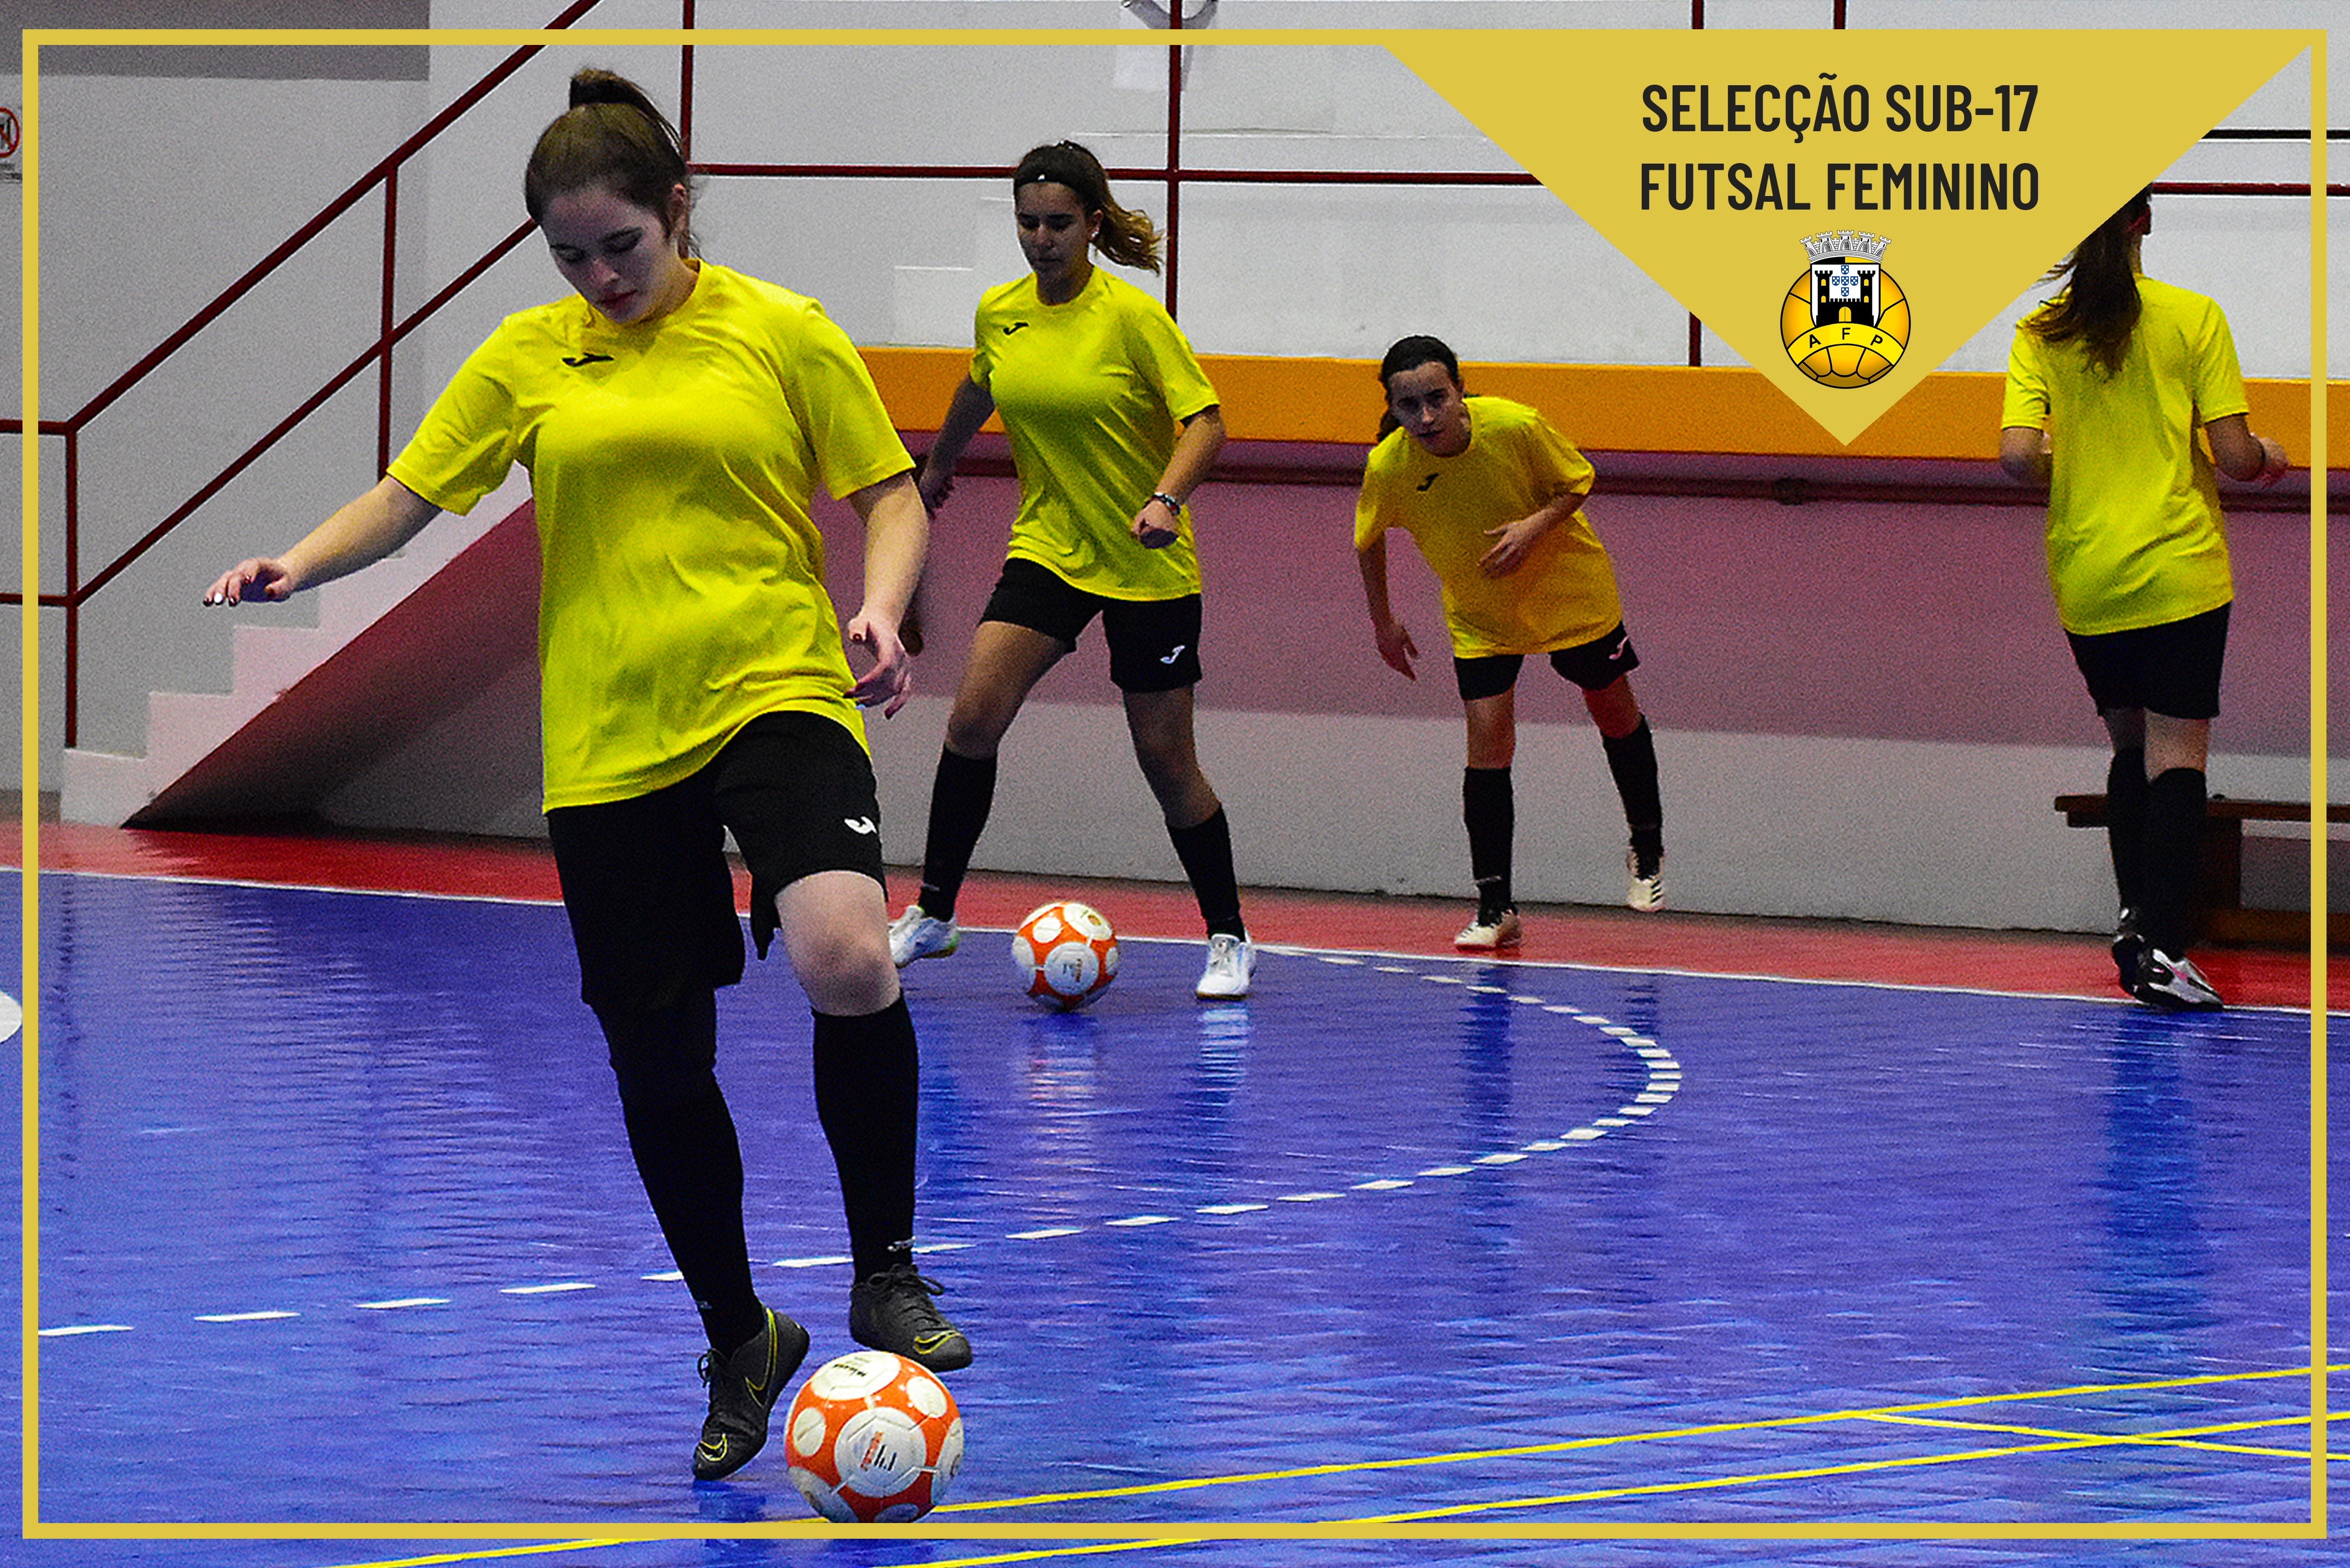 Selecção Distrital "Sub-17" Feminina Futsal